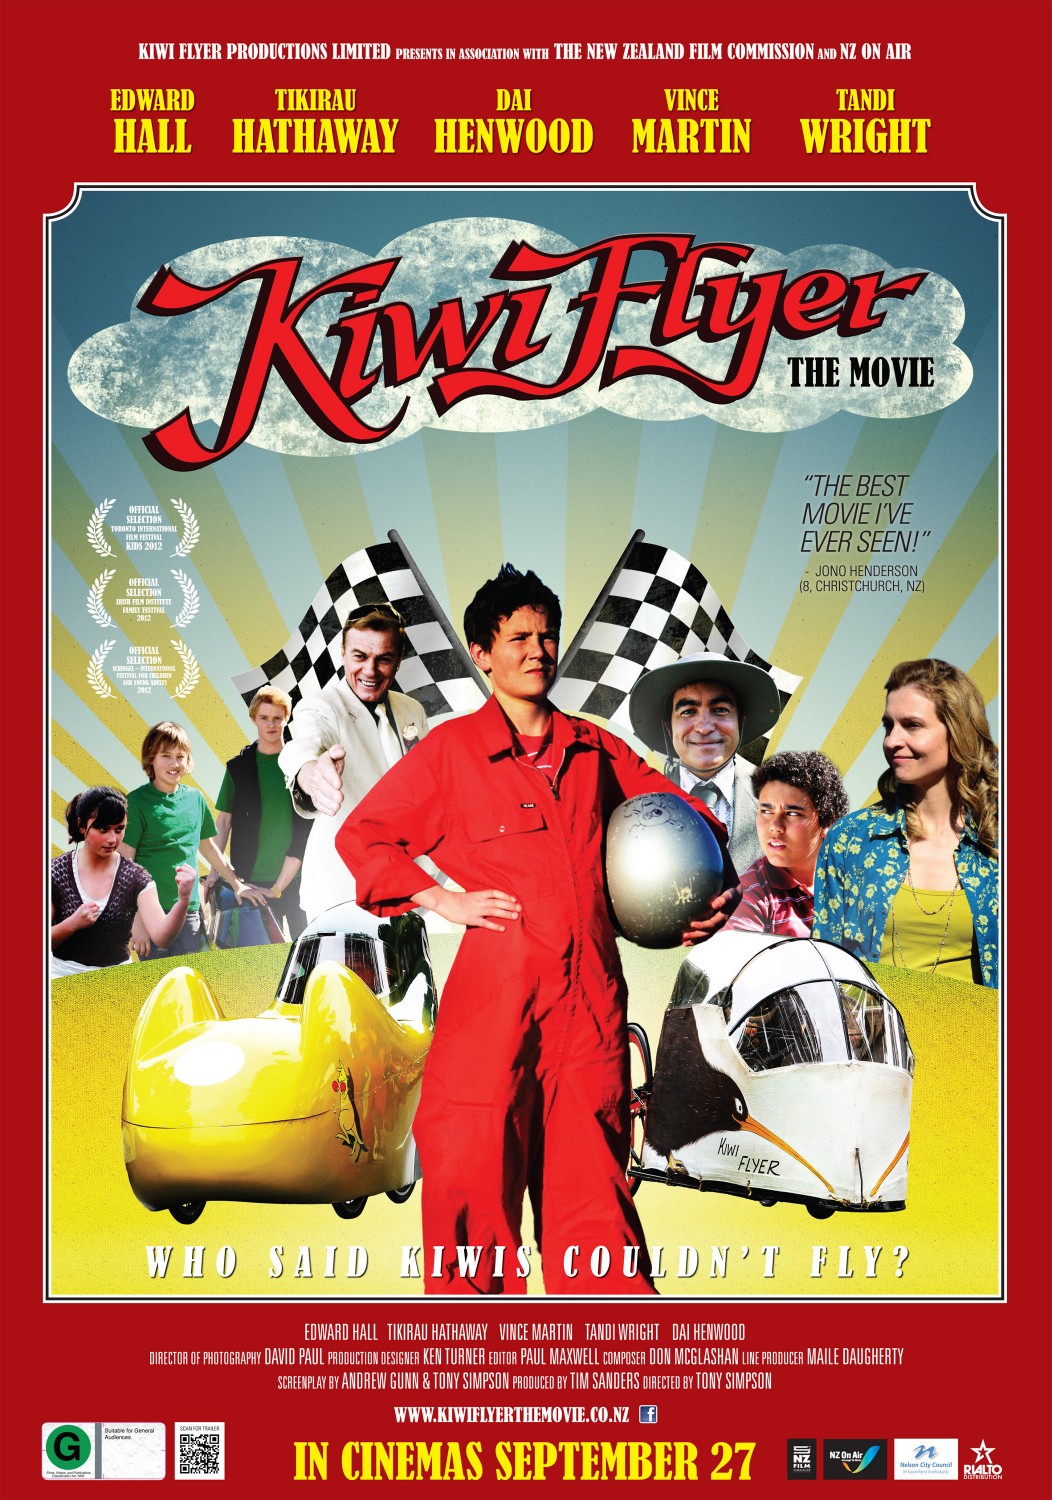 Extra Large Movie Poster Image for Kiwi Flyer 